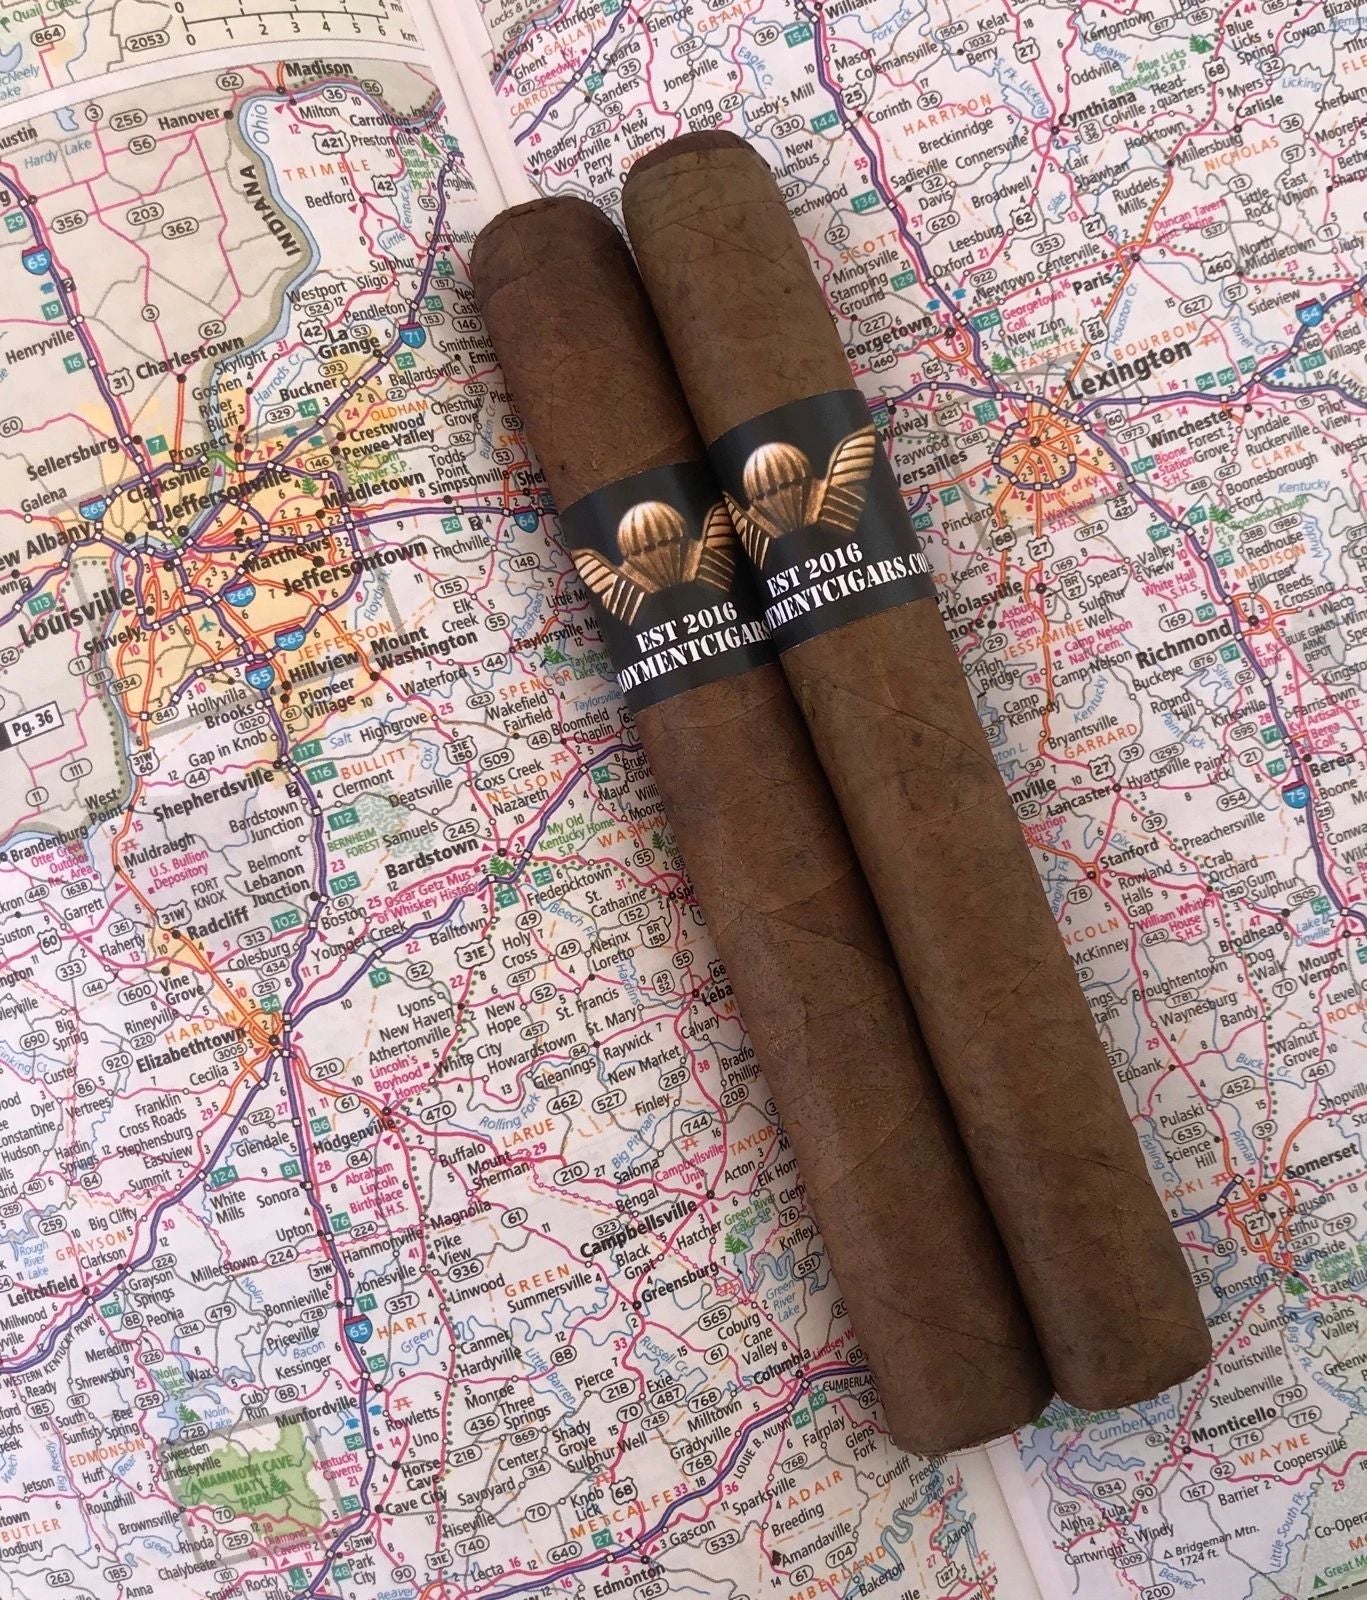 The Deployment Kentucky Black Label Cigar